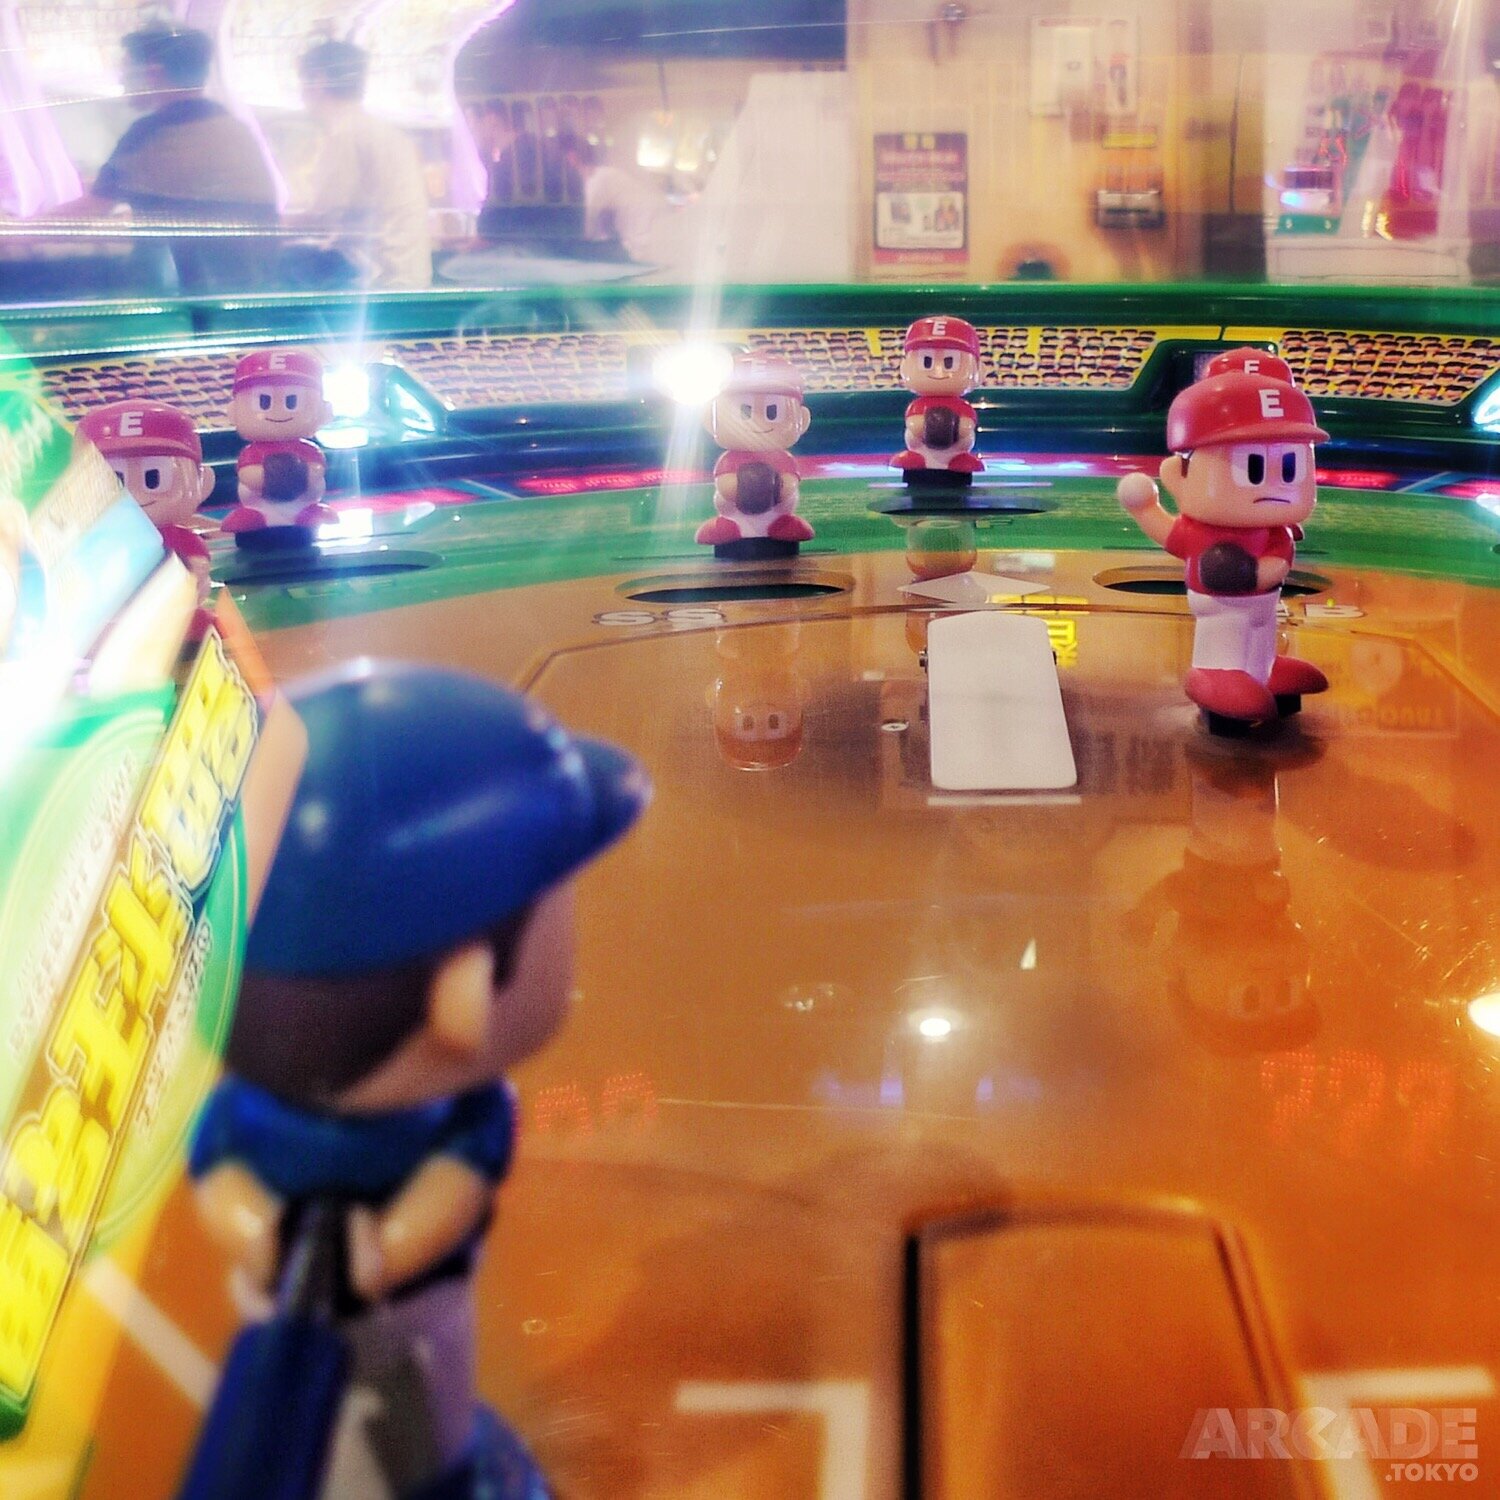 Warehouse Games Plastic Baseball Dudes?! Arcade Tokyo